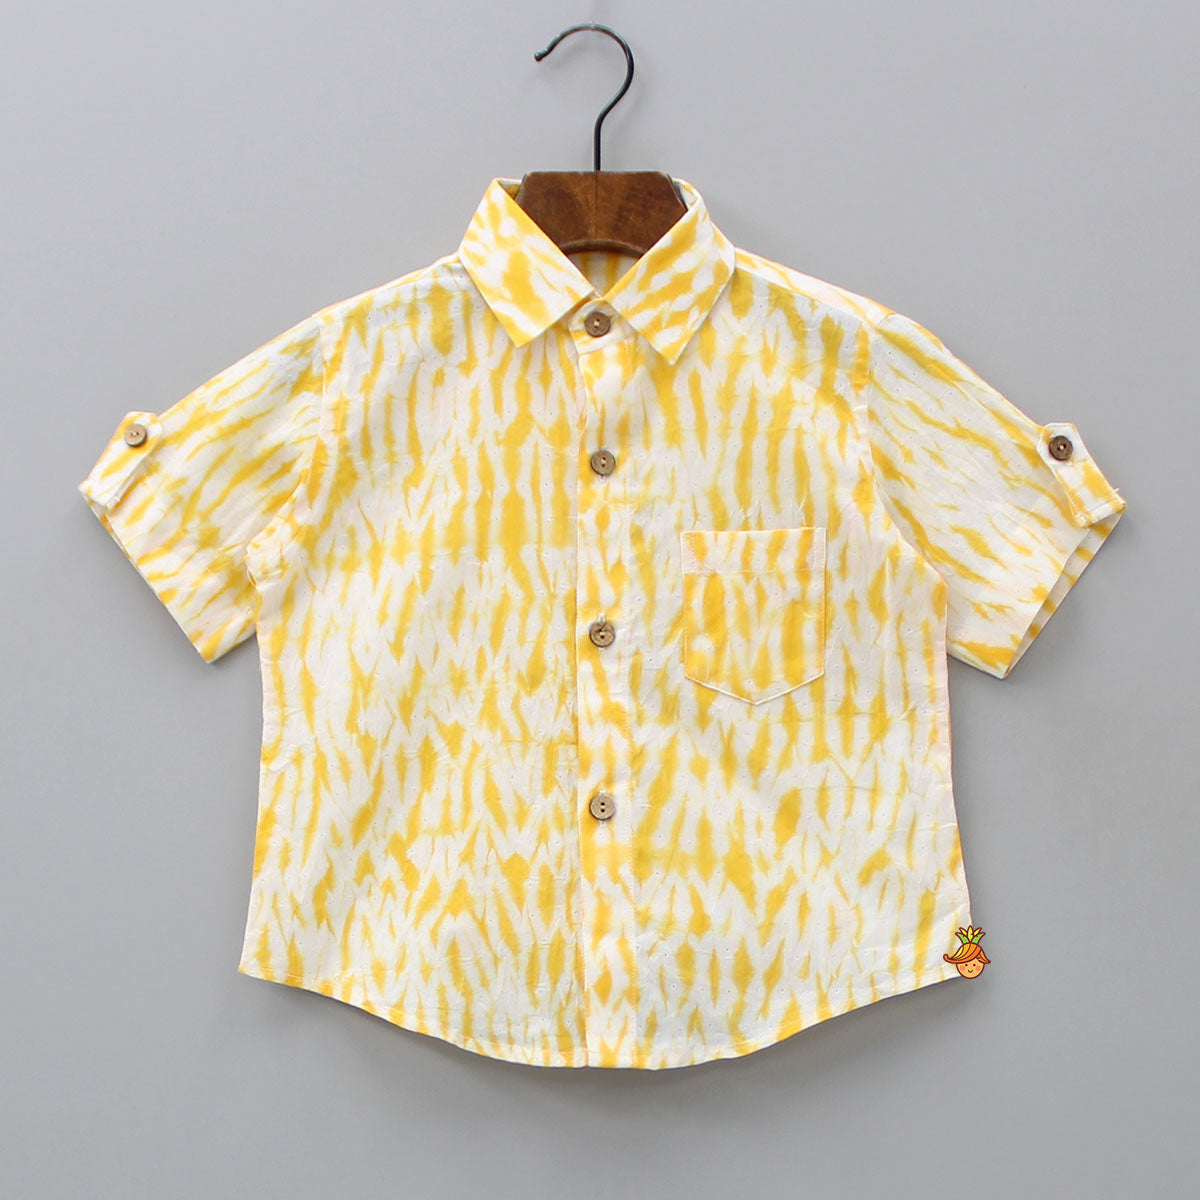 Pre Order: Shibori Printed Yellow Shirt